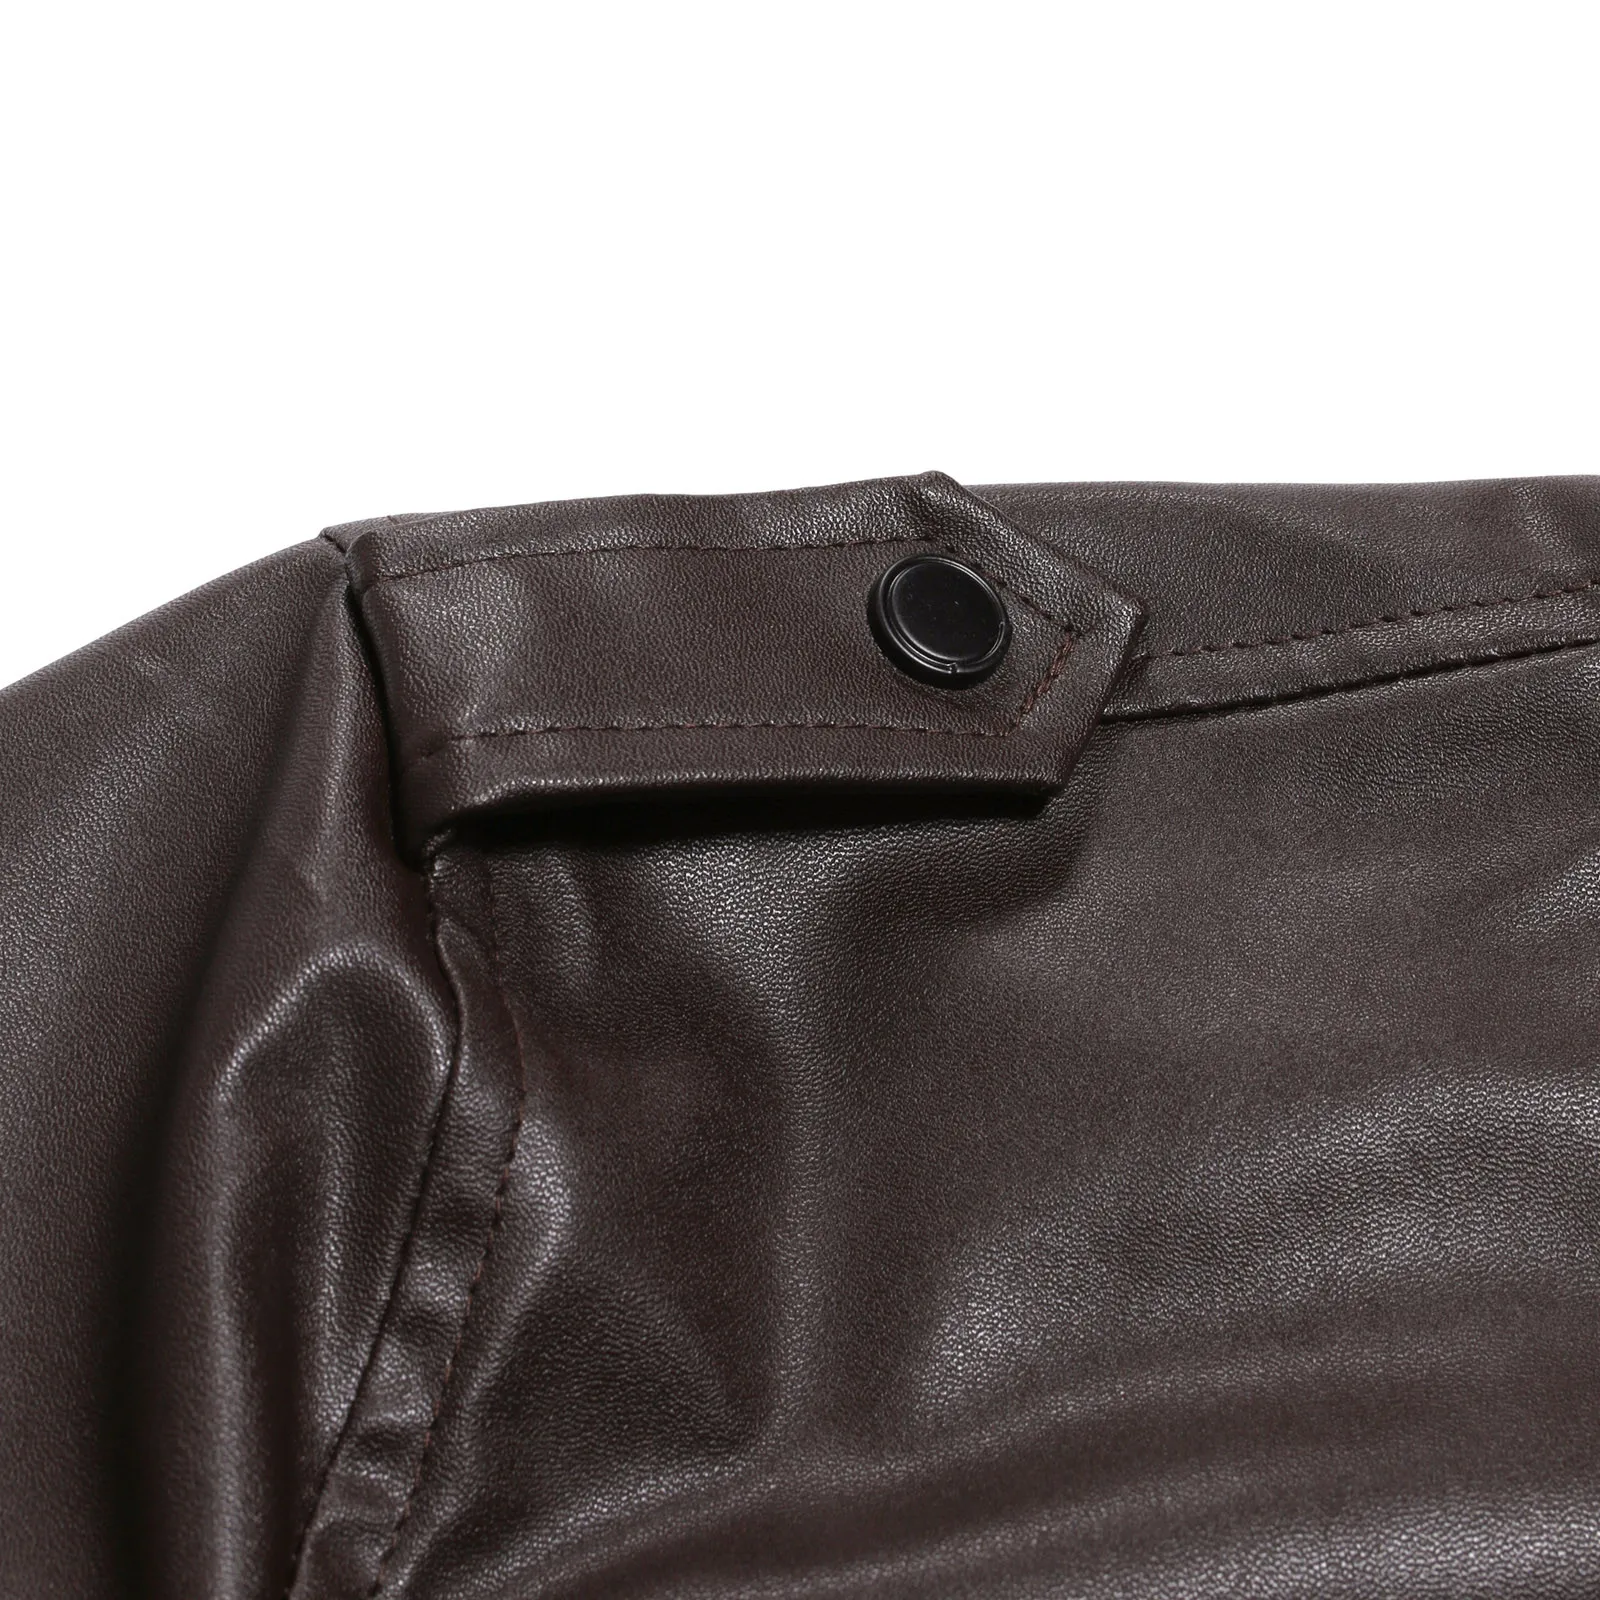 winter soldier jacket Men's Slim Leather Jacket Stand Collar Zipper Pocket Short Jacket Coat Male Slim-fit Stand-collar Cropped Leather Jacket genuine leather motorcycle jackets